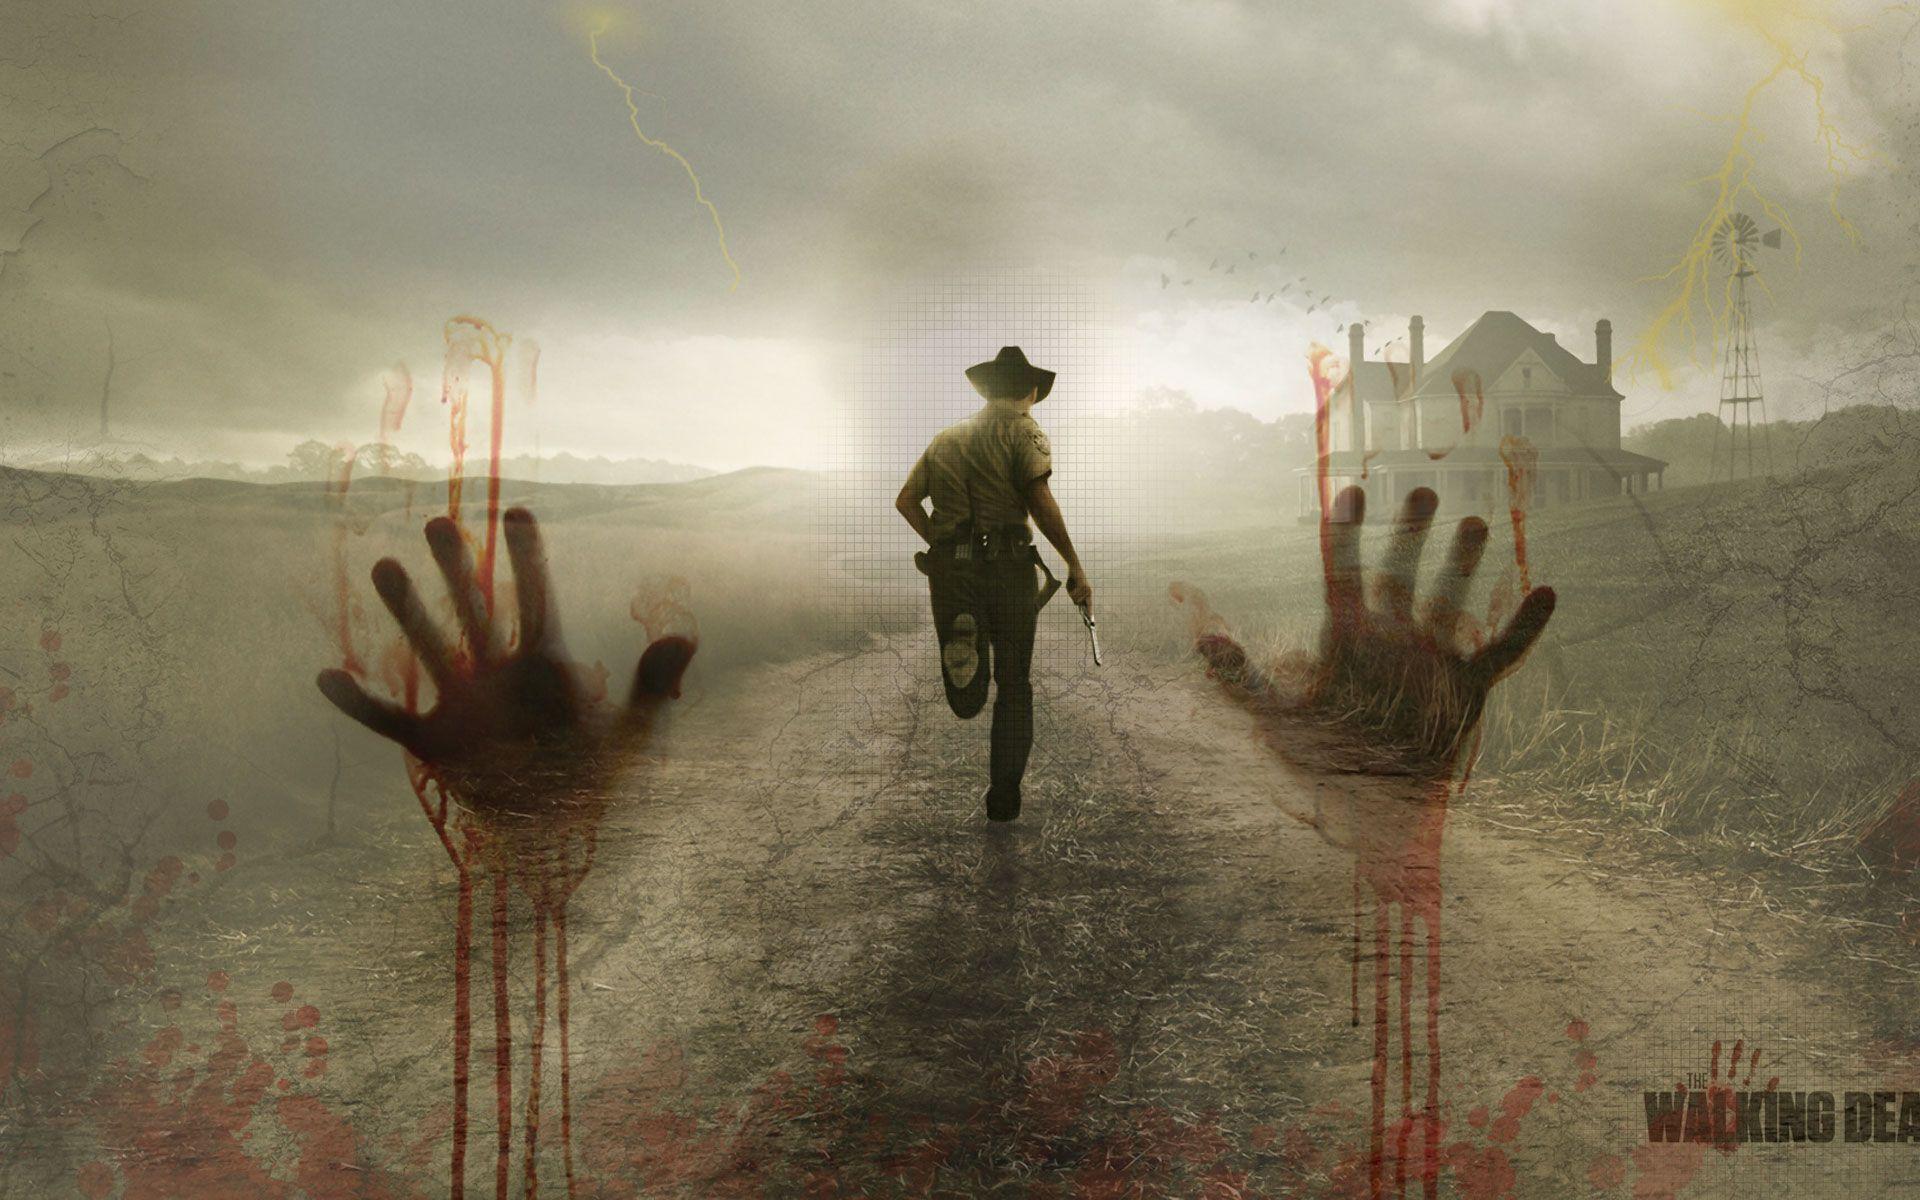 The Walking Dead Wallpaper, Amazing High Resolution The Walking